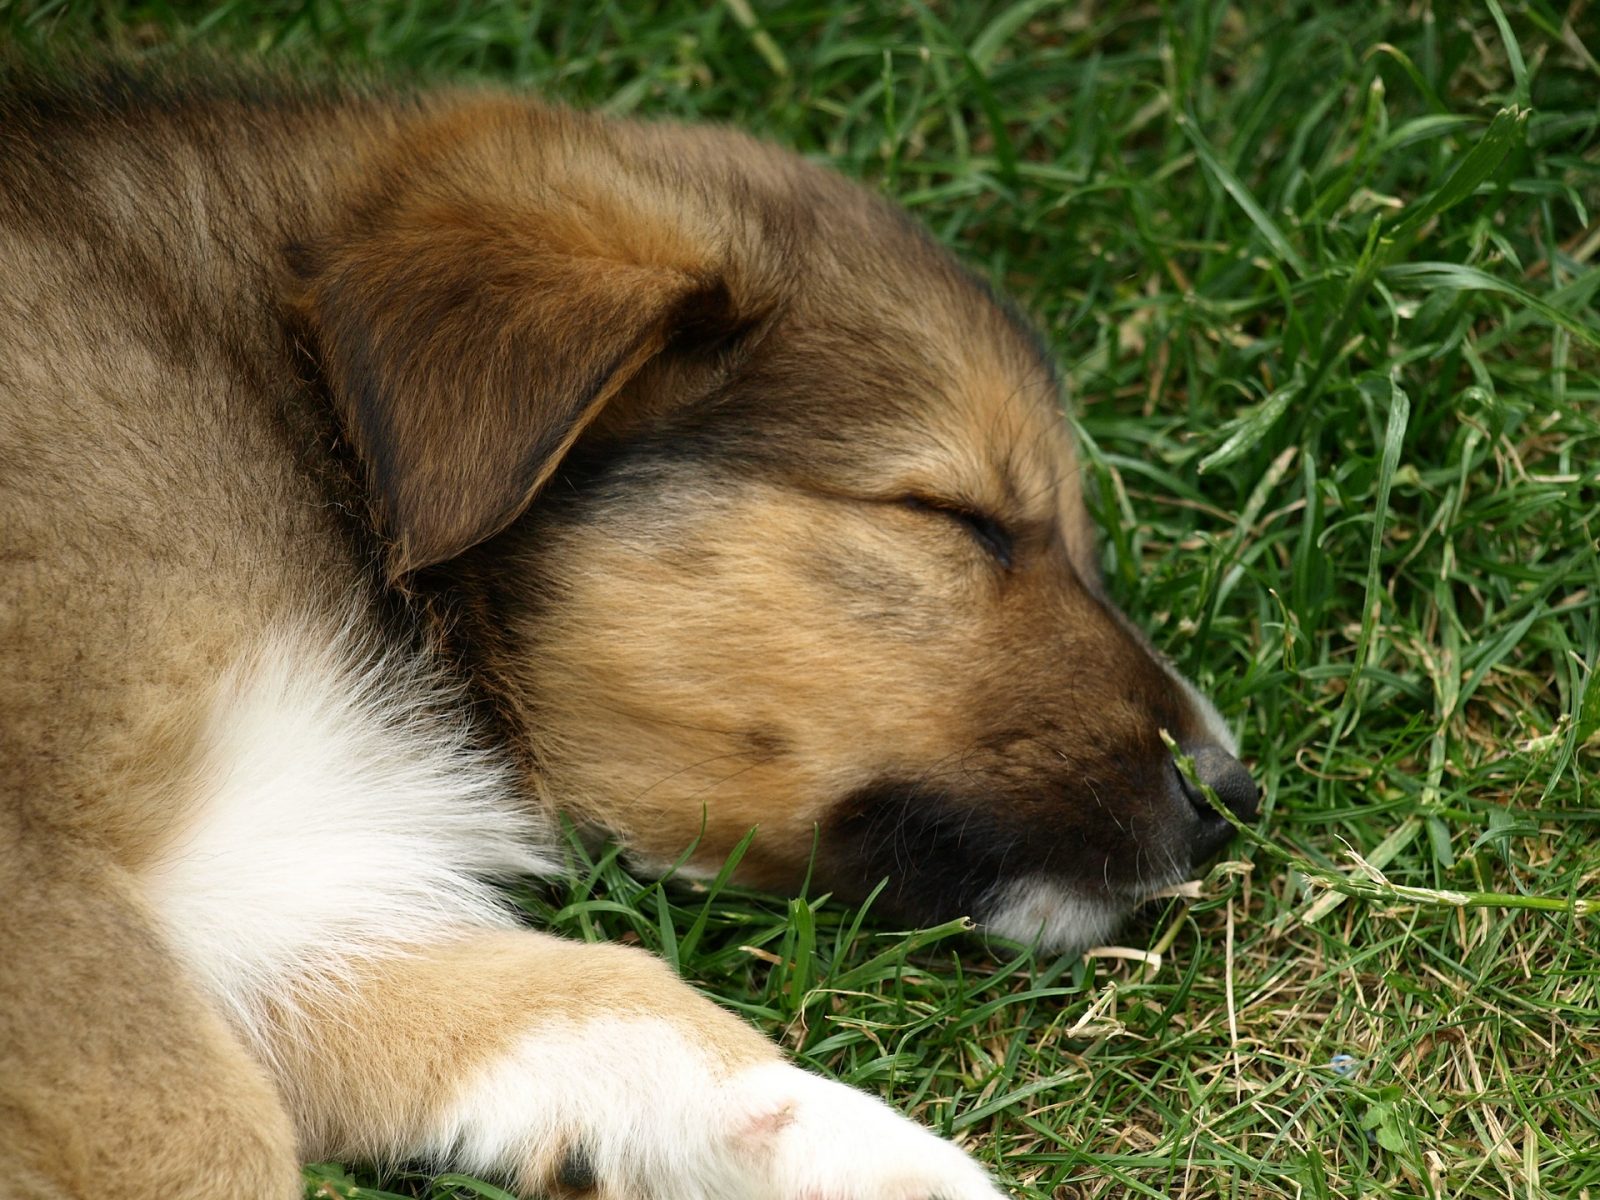 Puppy lying on grass